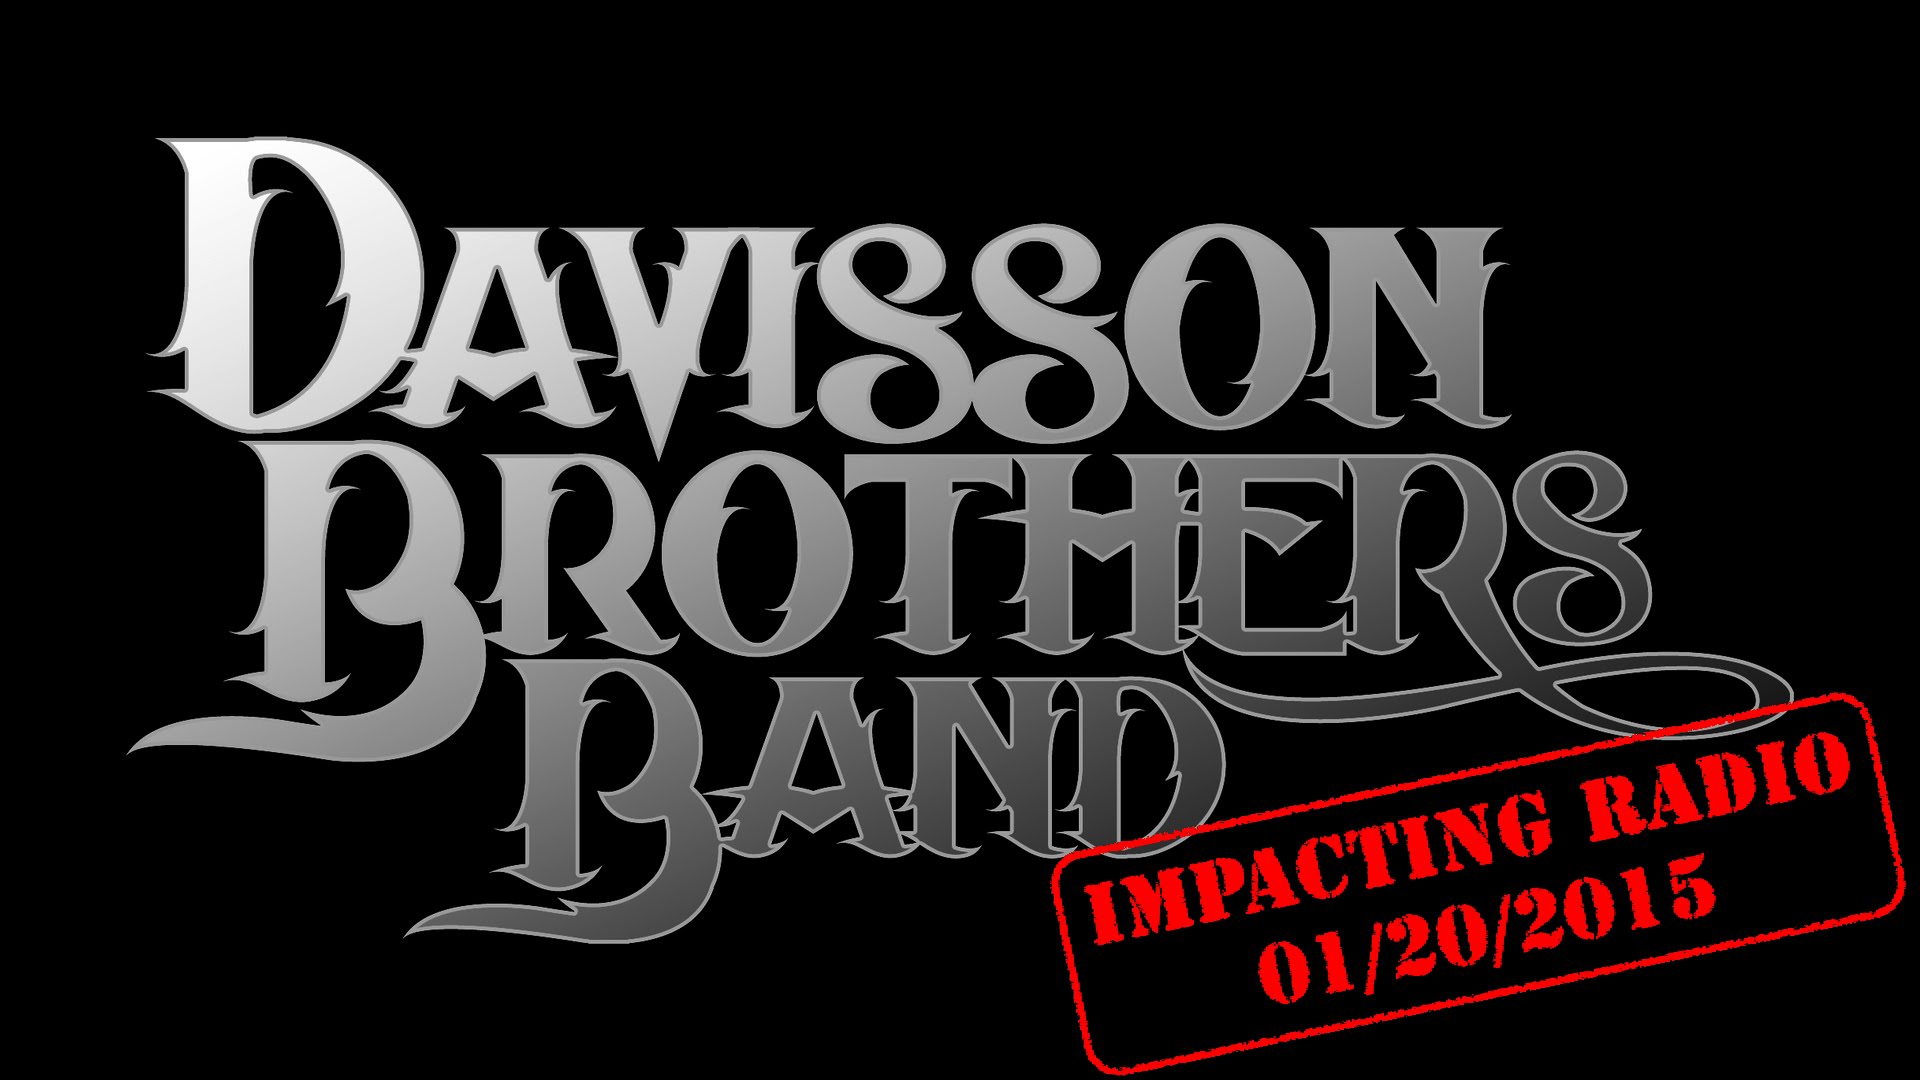 Davisson Brothers Band - Video Gallery - 019 - 2014